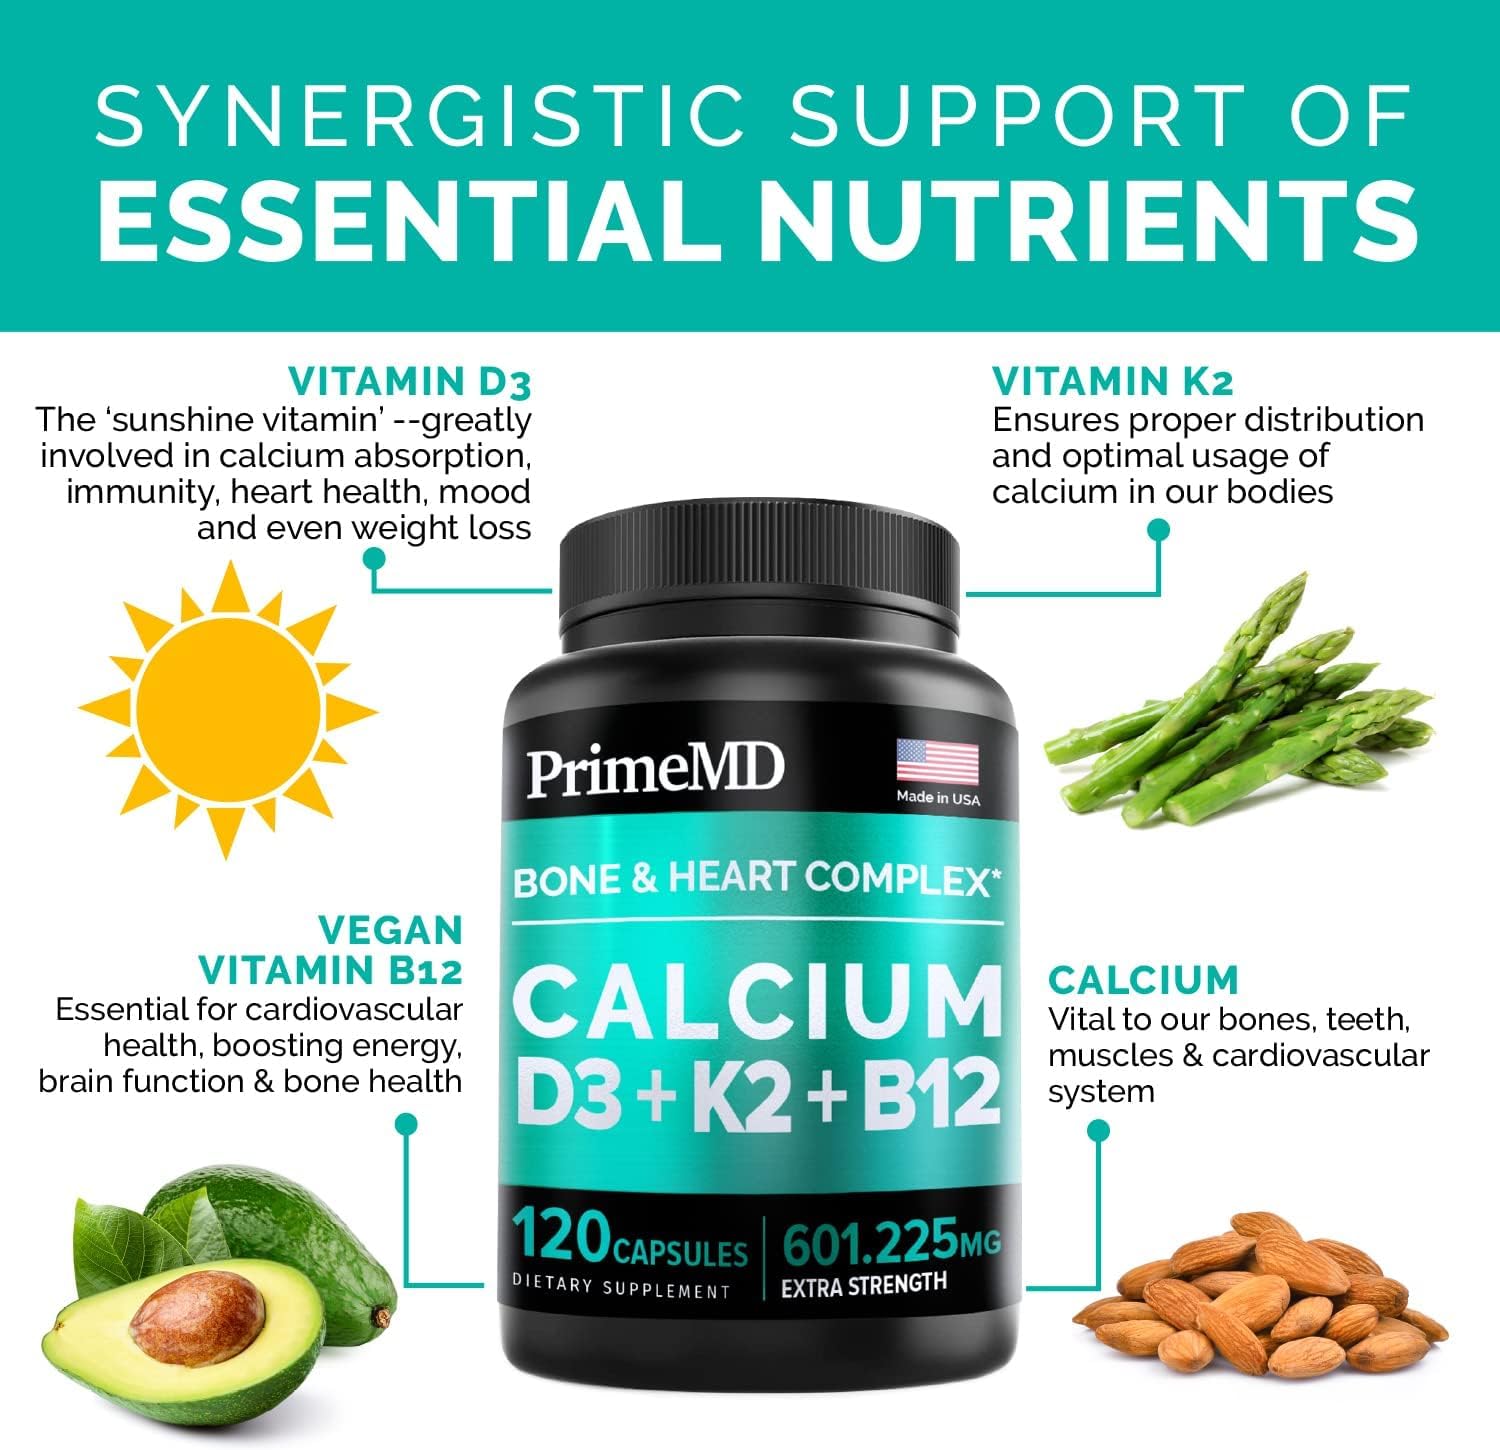 PrimeMD 4-in-1 Calcium Supplements for Women & Men - Calcium 600mg with Vitamin D3 K2 B12 5000 IU Supplement for Heart, Bone & Body Defenses - Gluten-Free, Non-GMO, Vegan Friendly (120 Count) : Health & Household